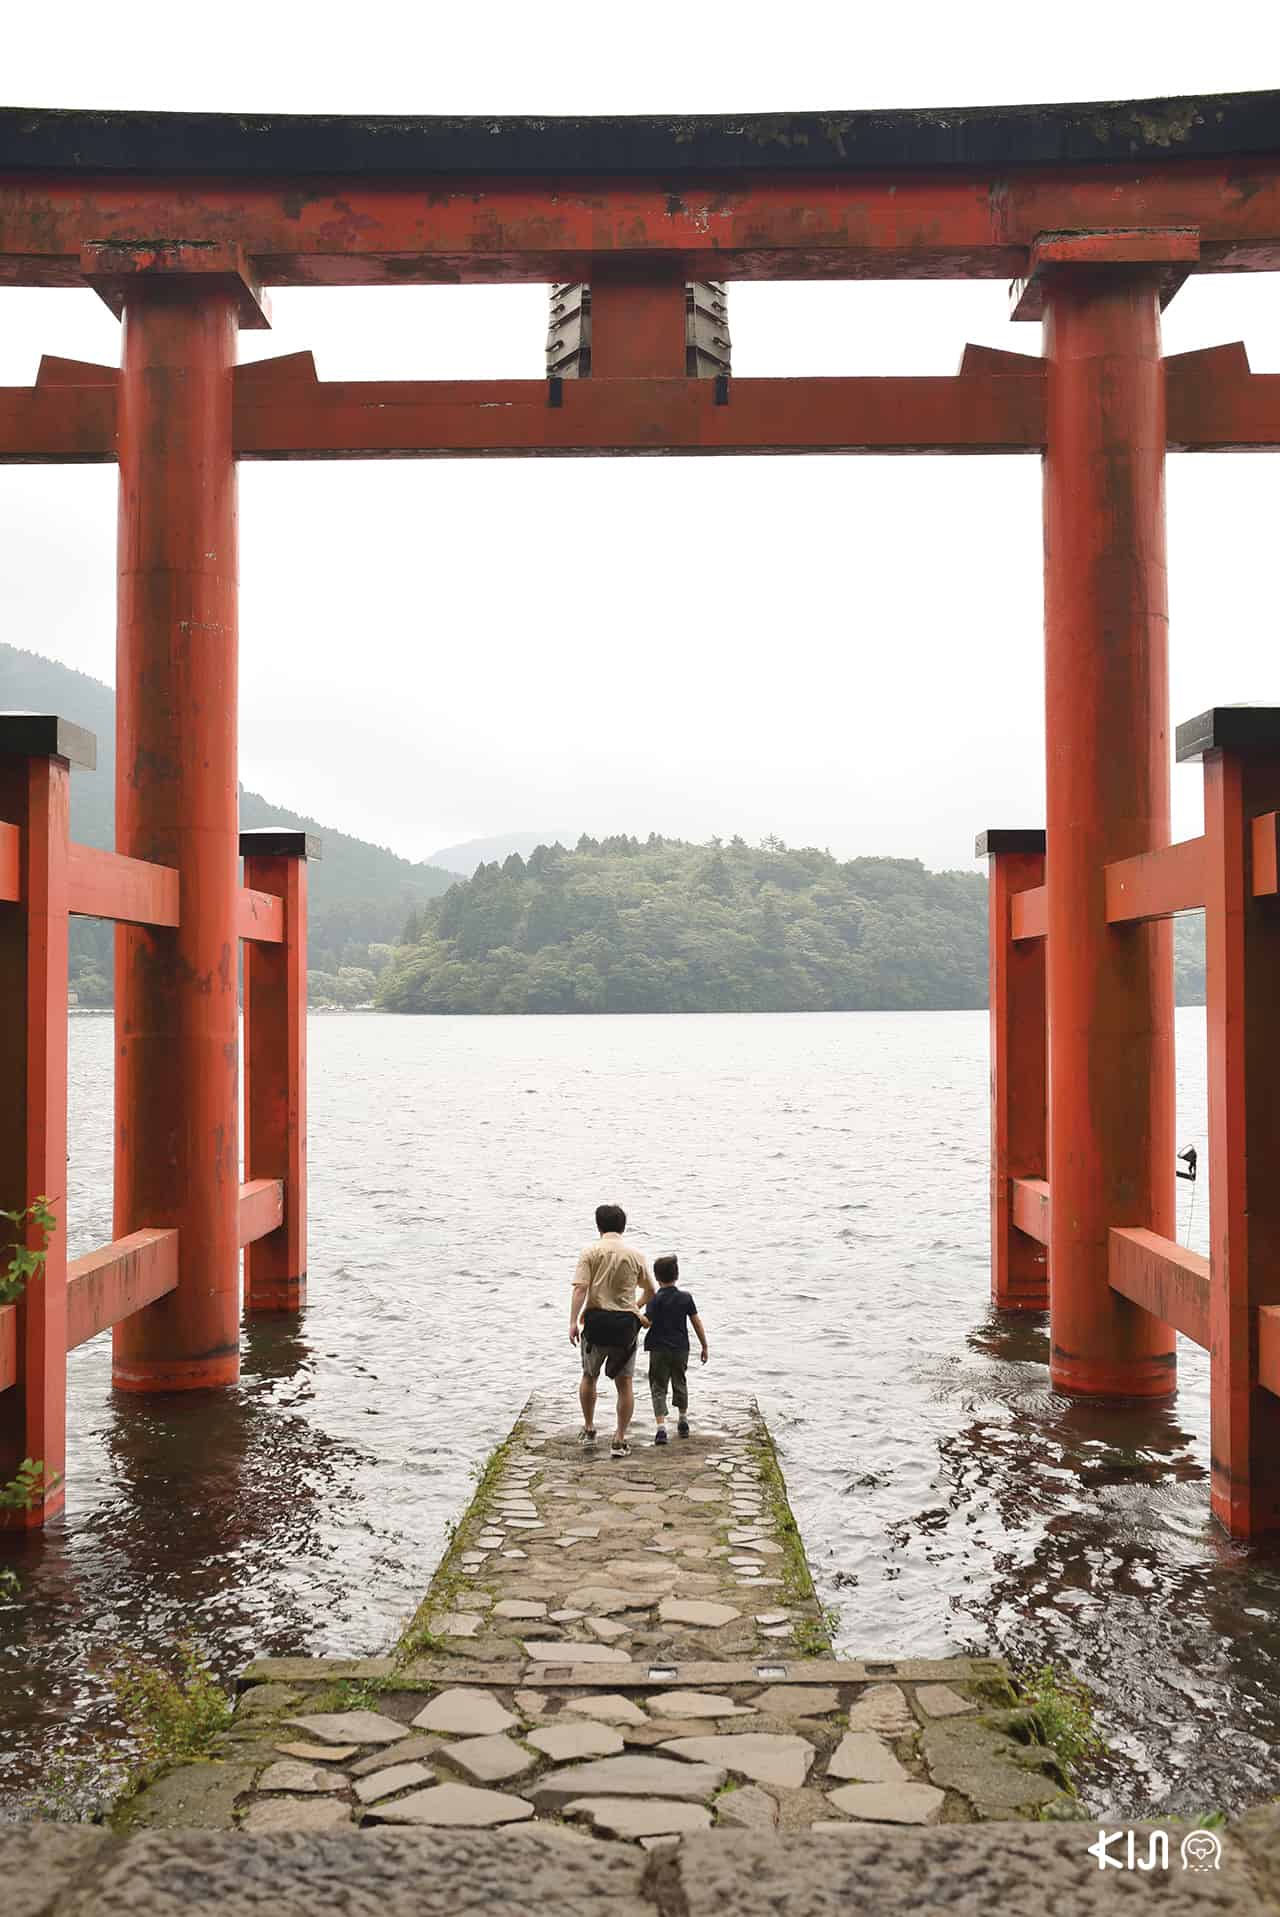 Hakone Shrine เสาโทริอิสีแดงสดขนาดใหญ่ตั้งอยู่ในทะเลสาบอาชิ (Lake Ashi)